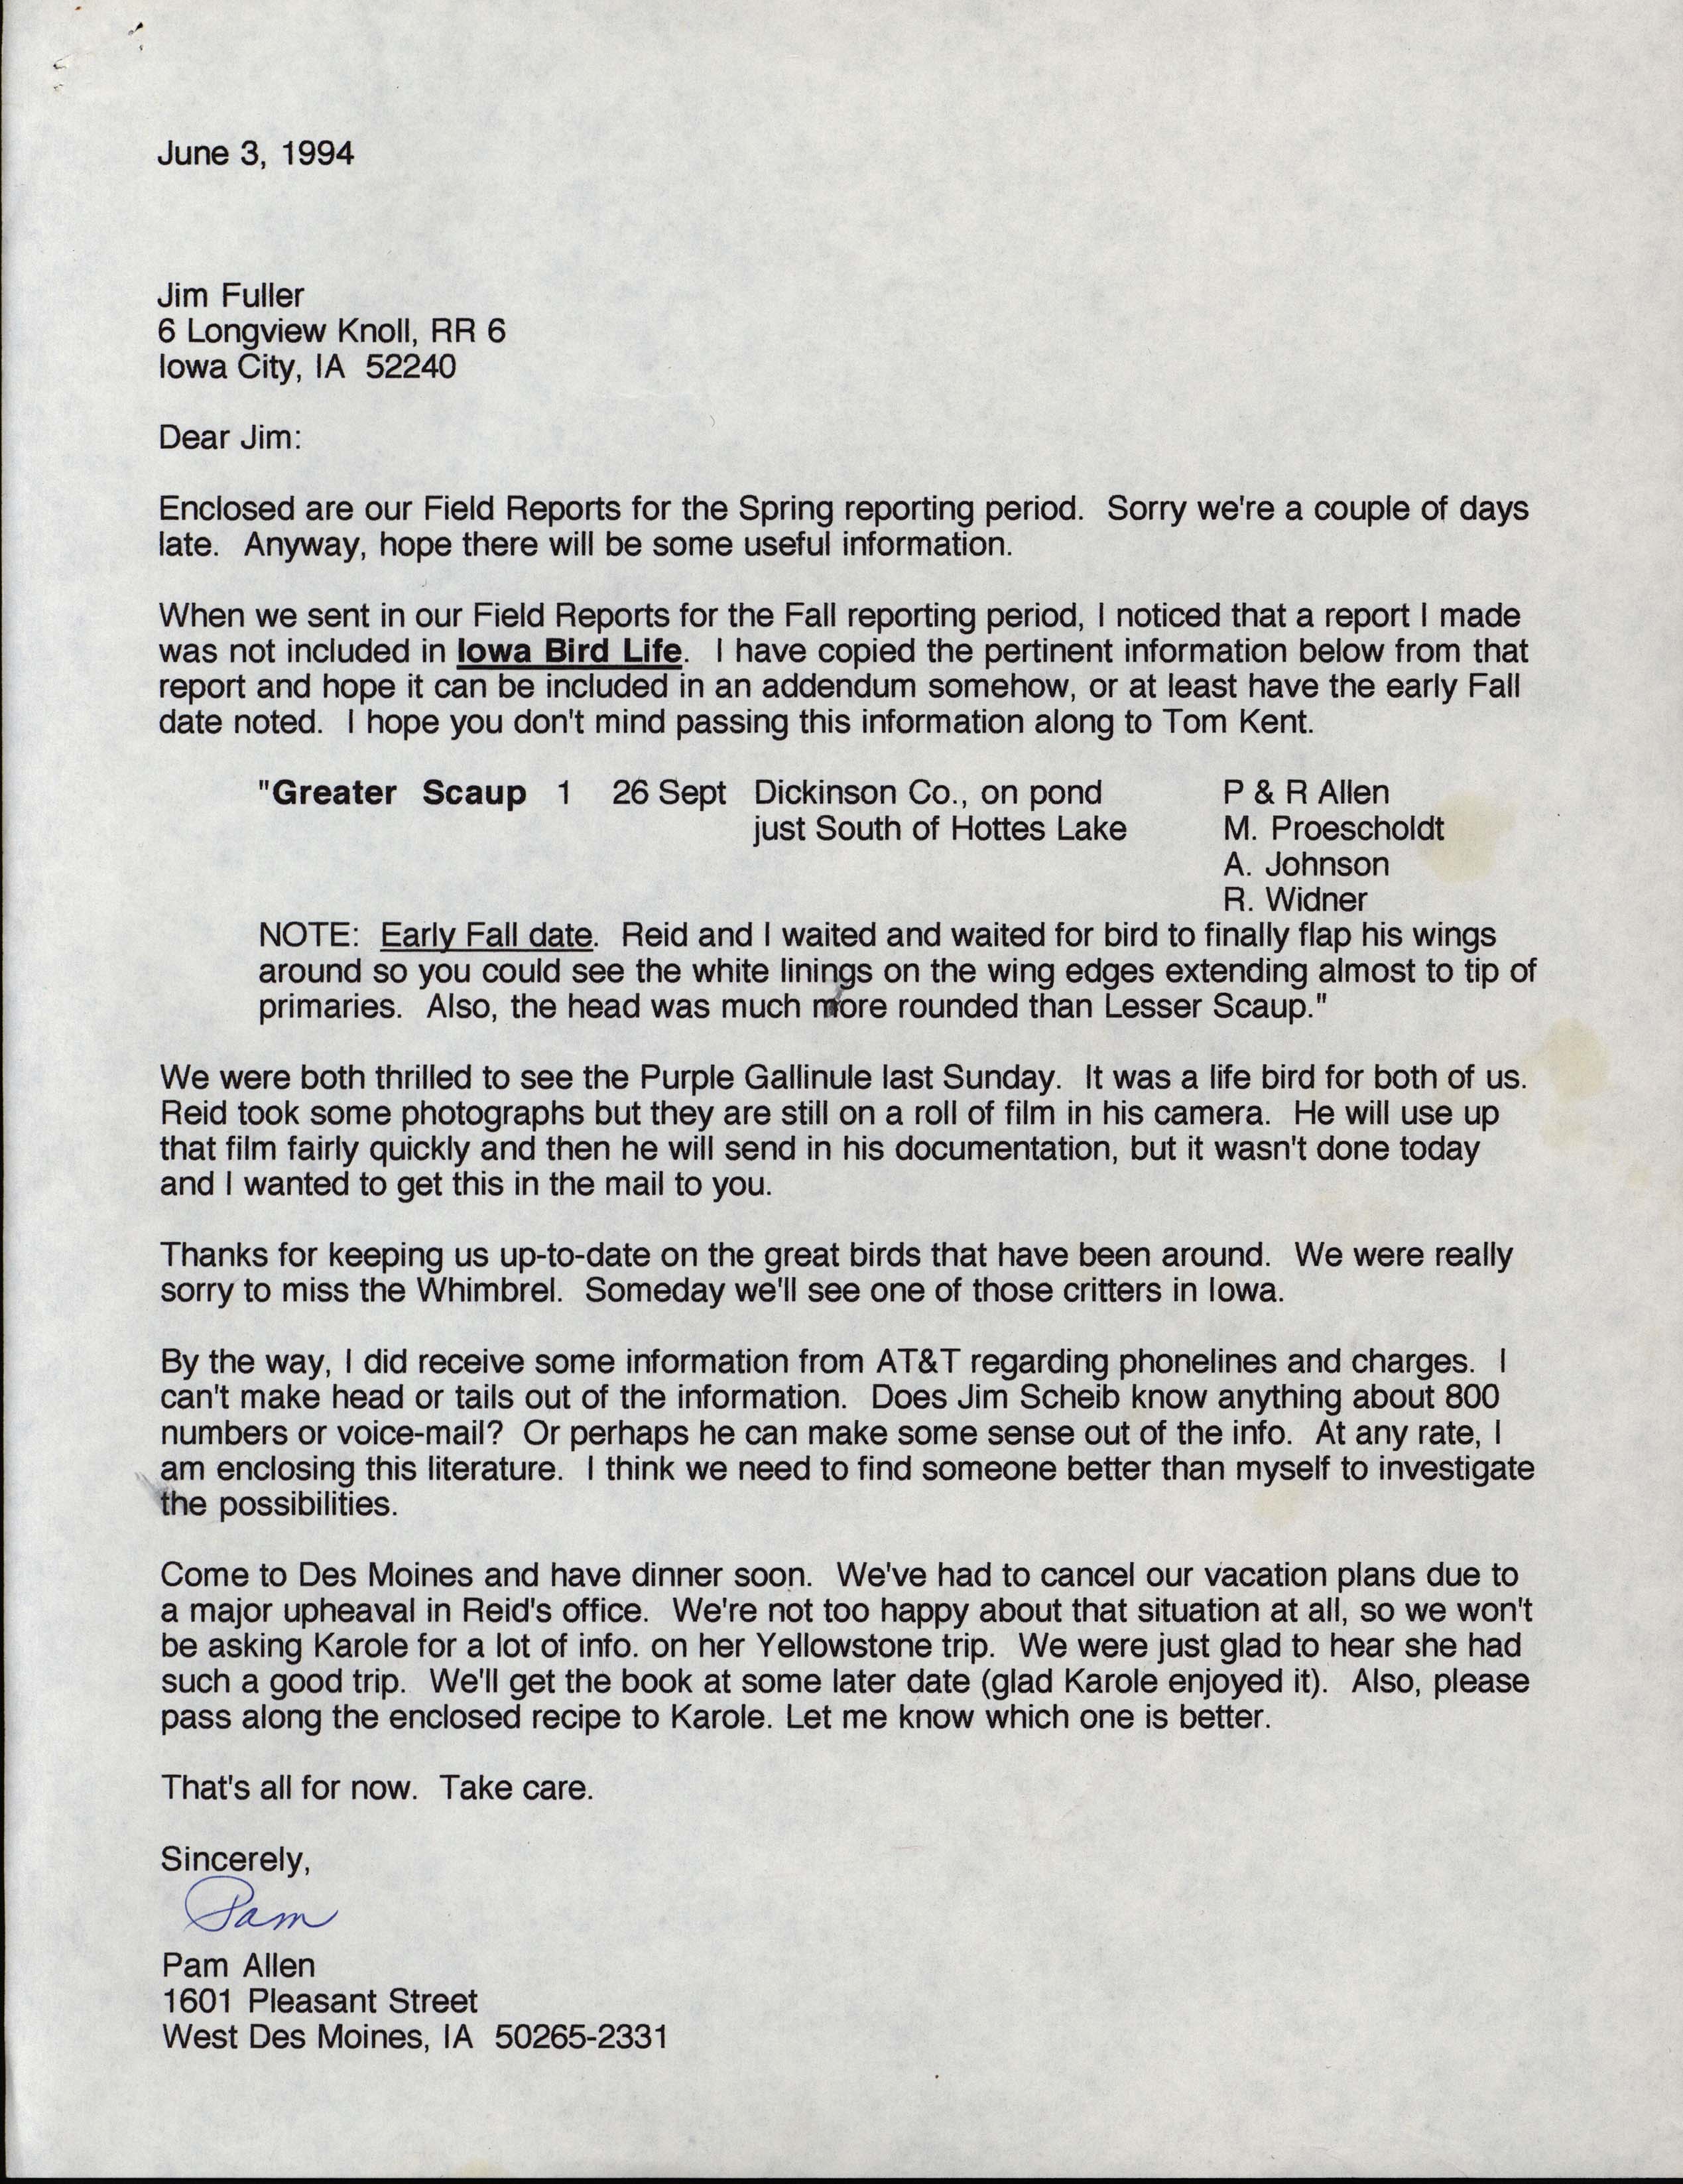 Pam Allen letter to Jim Fuller regarding Greater Scaup addendum for the Fall report, June 3, 1994